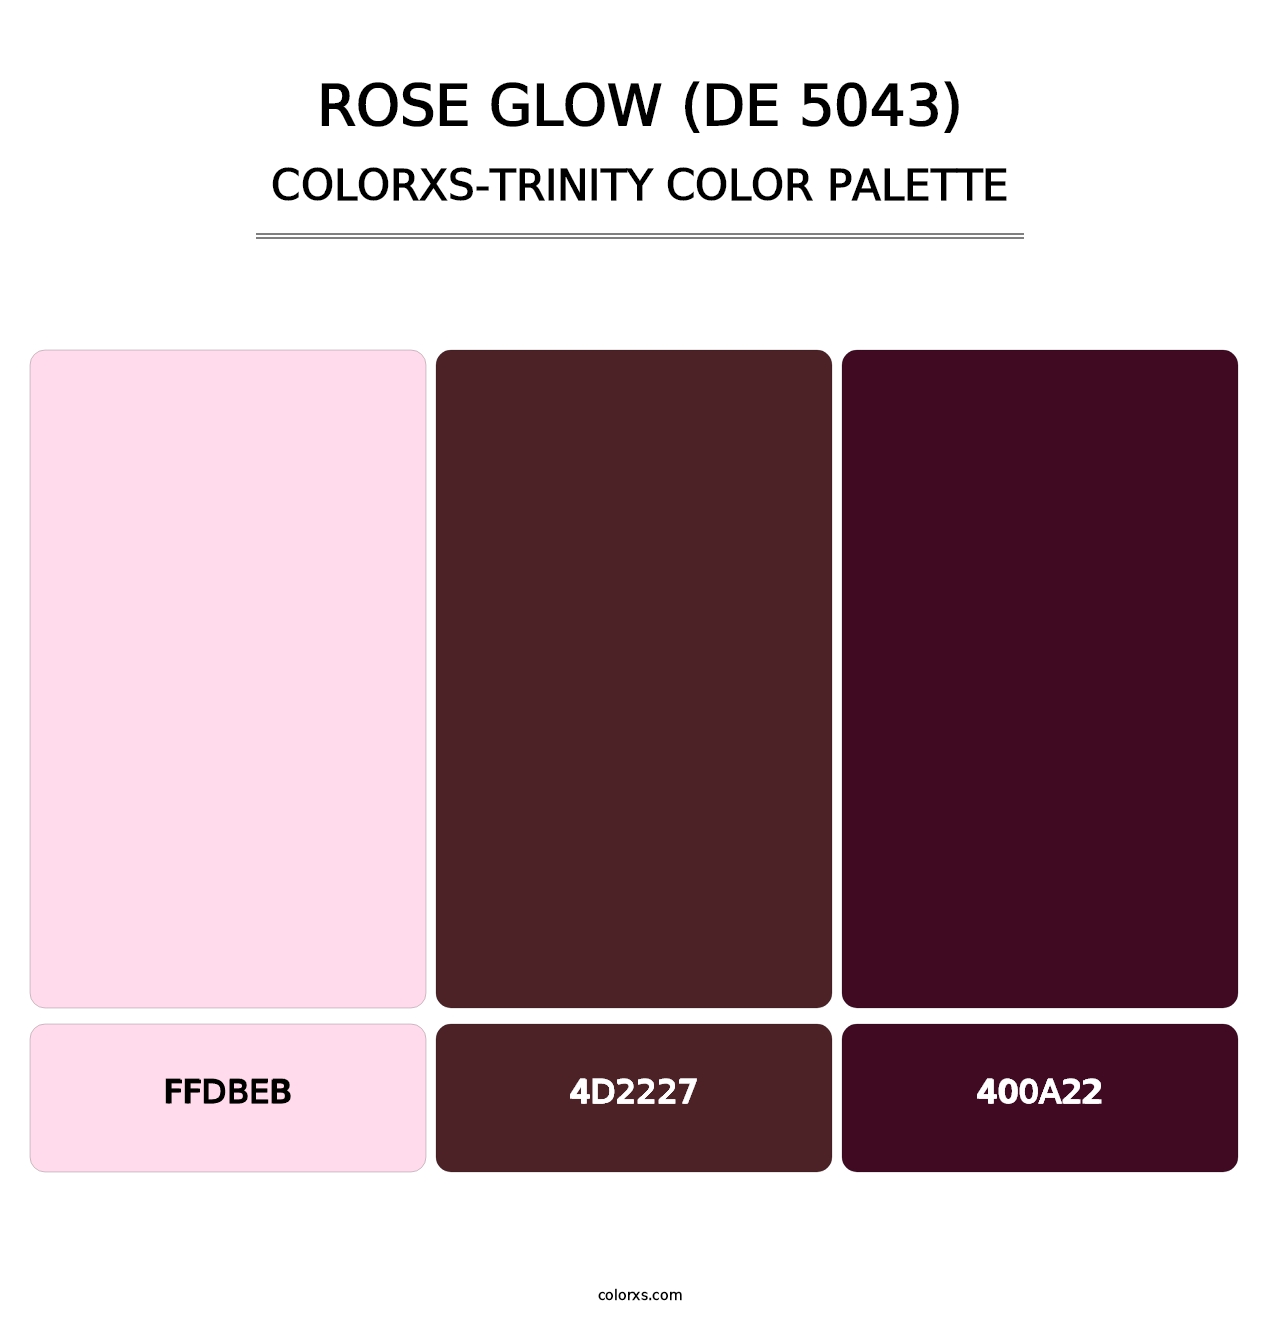 Rose Glow (DE 5043) - Colorxs Trinity Palette